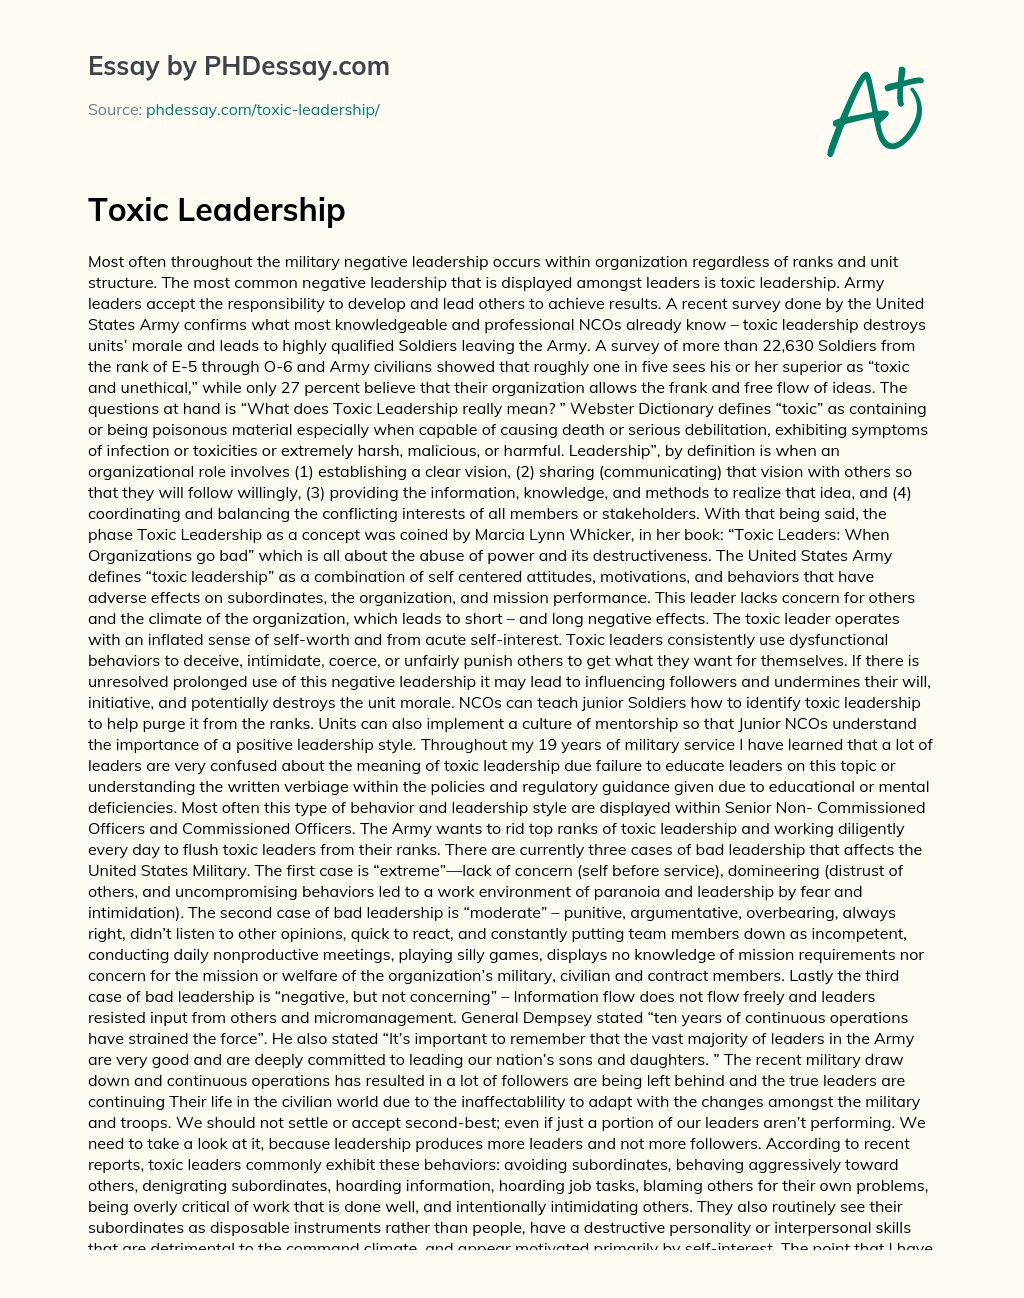 Toxic Leadership essay